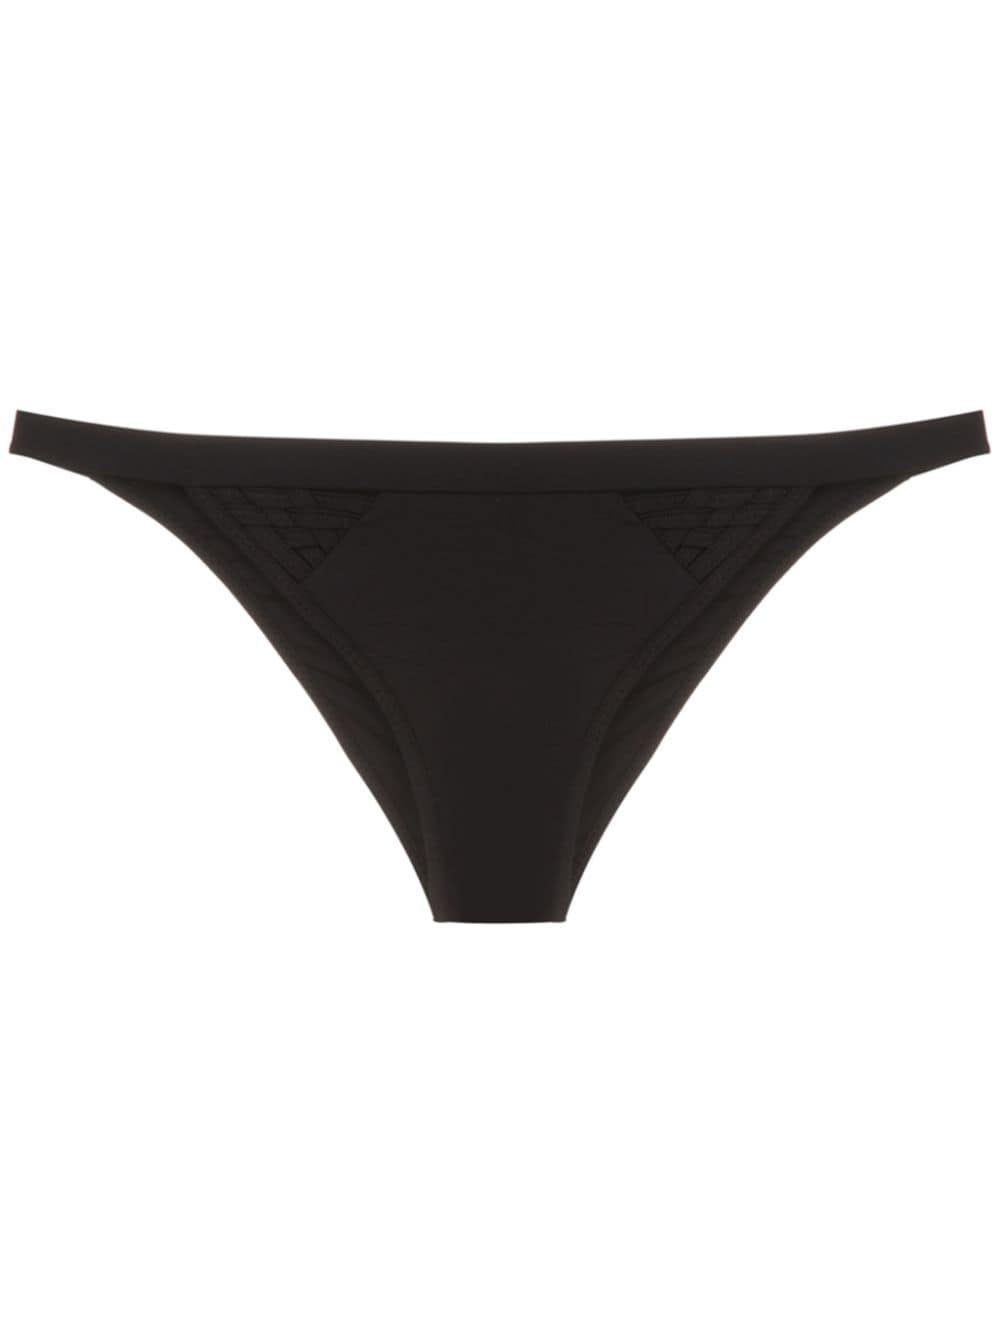 Image 1 of Clube Bossa Eames bikini bottoms